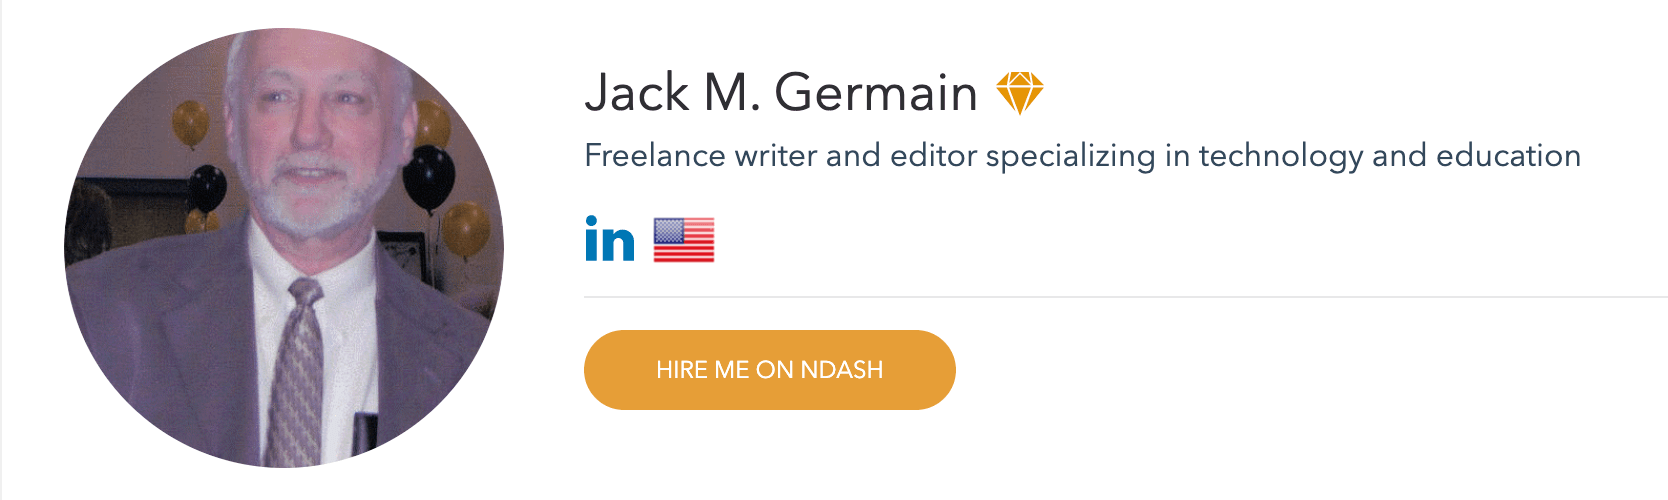 jack m germain freelance writer and editor